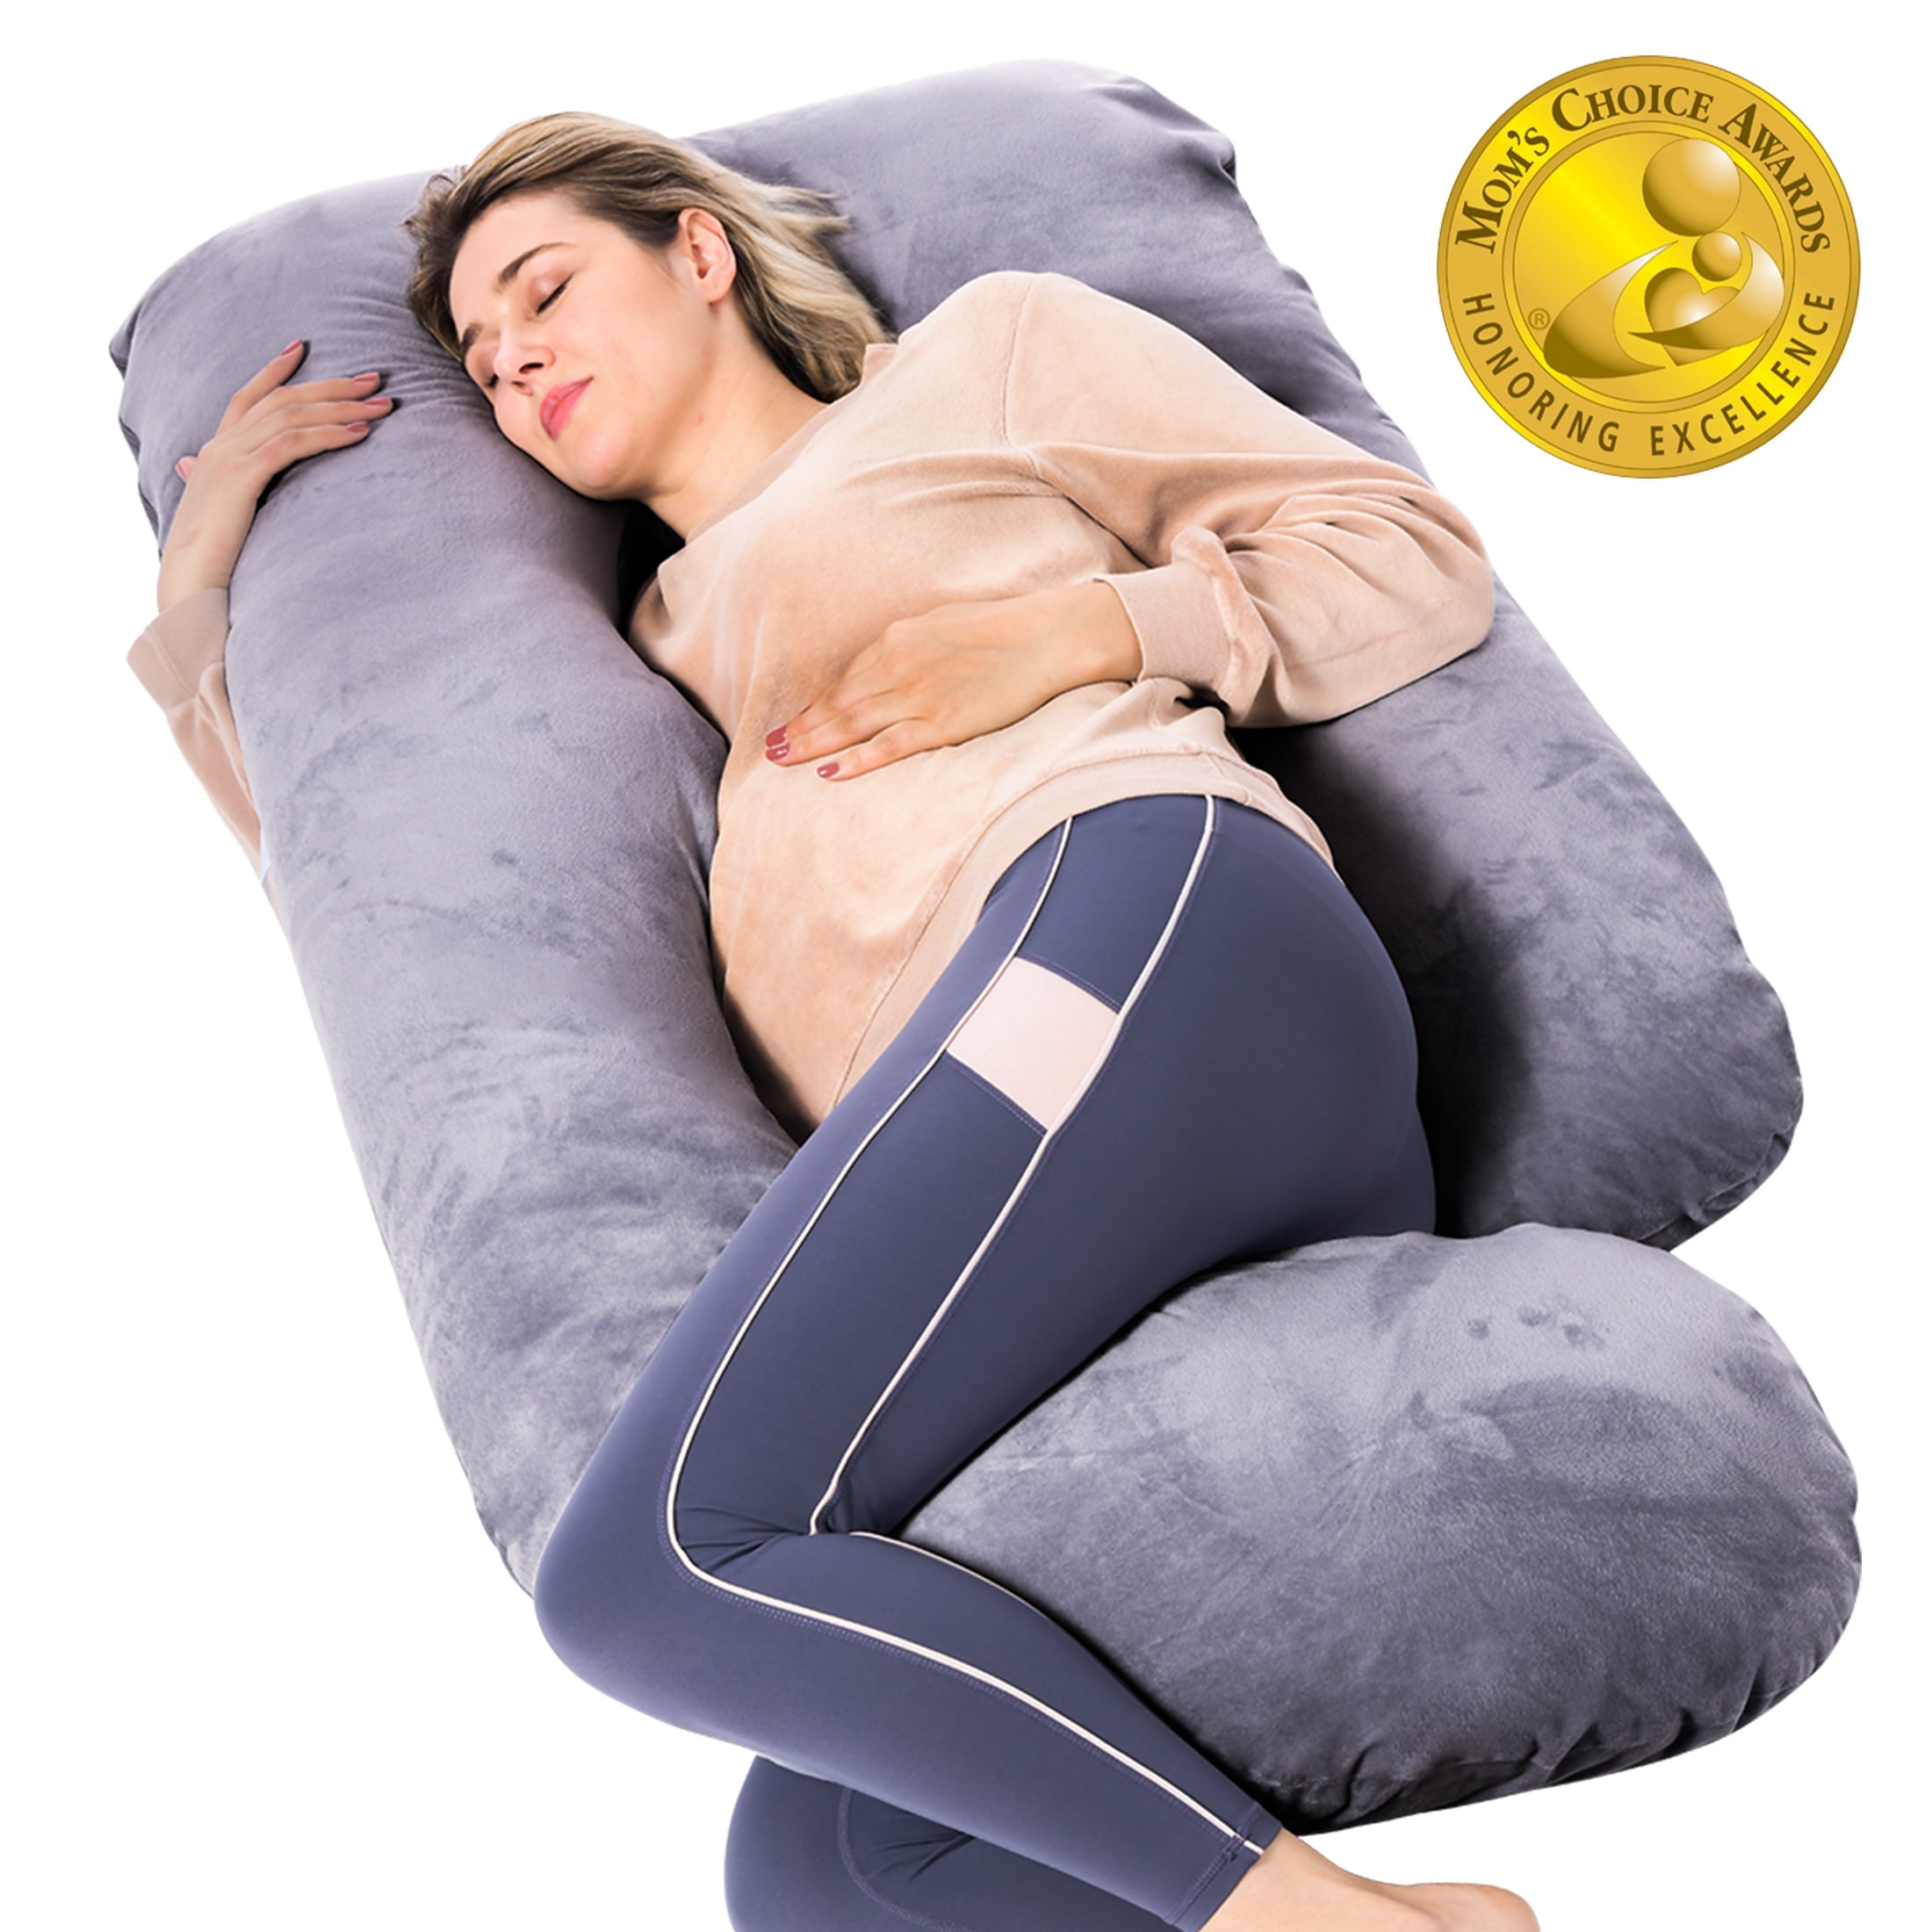 Pregnancy Pillow Adjustable Loft Maternity Pillow Multifunctional Full Body Pillow